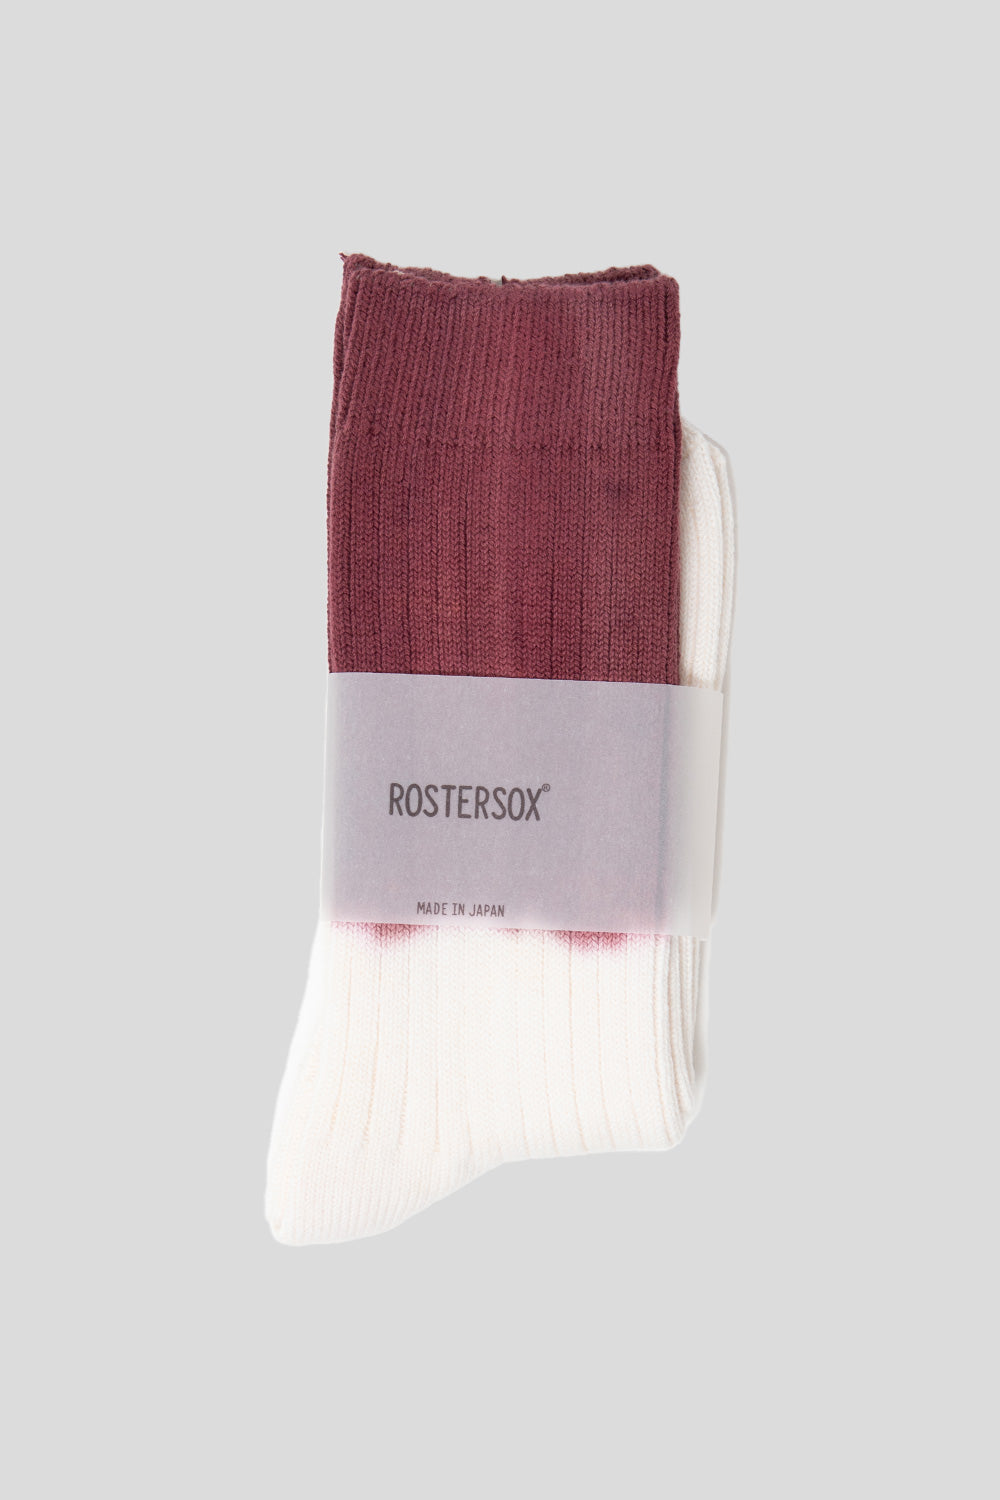 Rostersox HRD Rib Socks in Burgandy